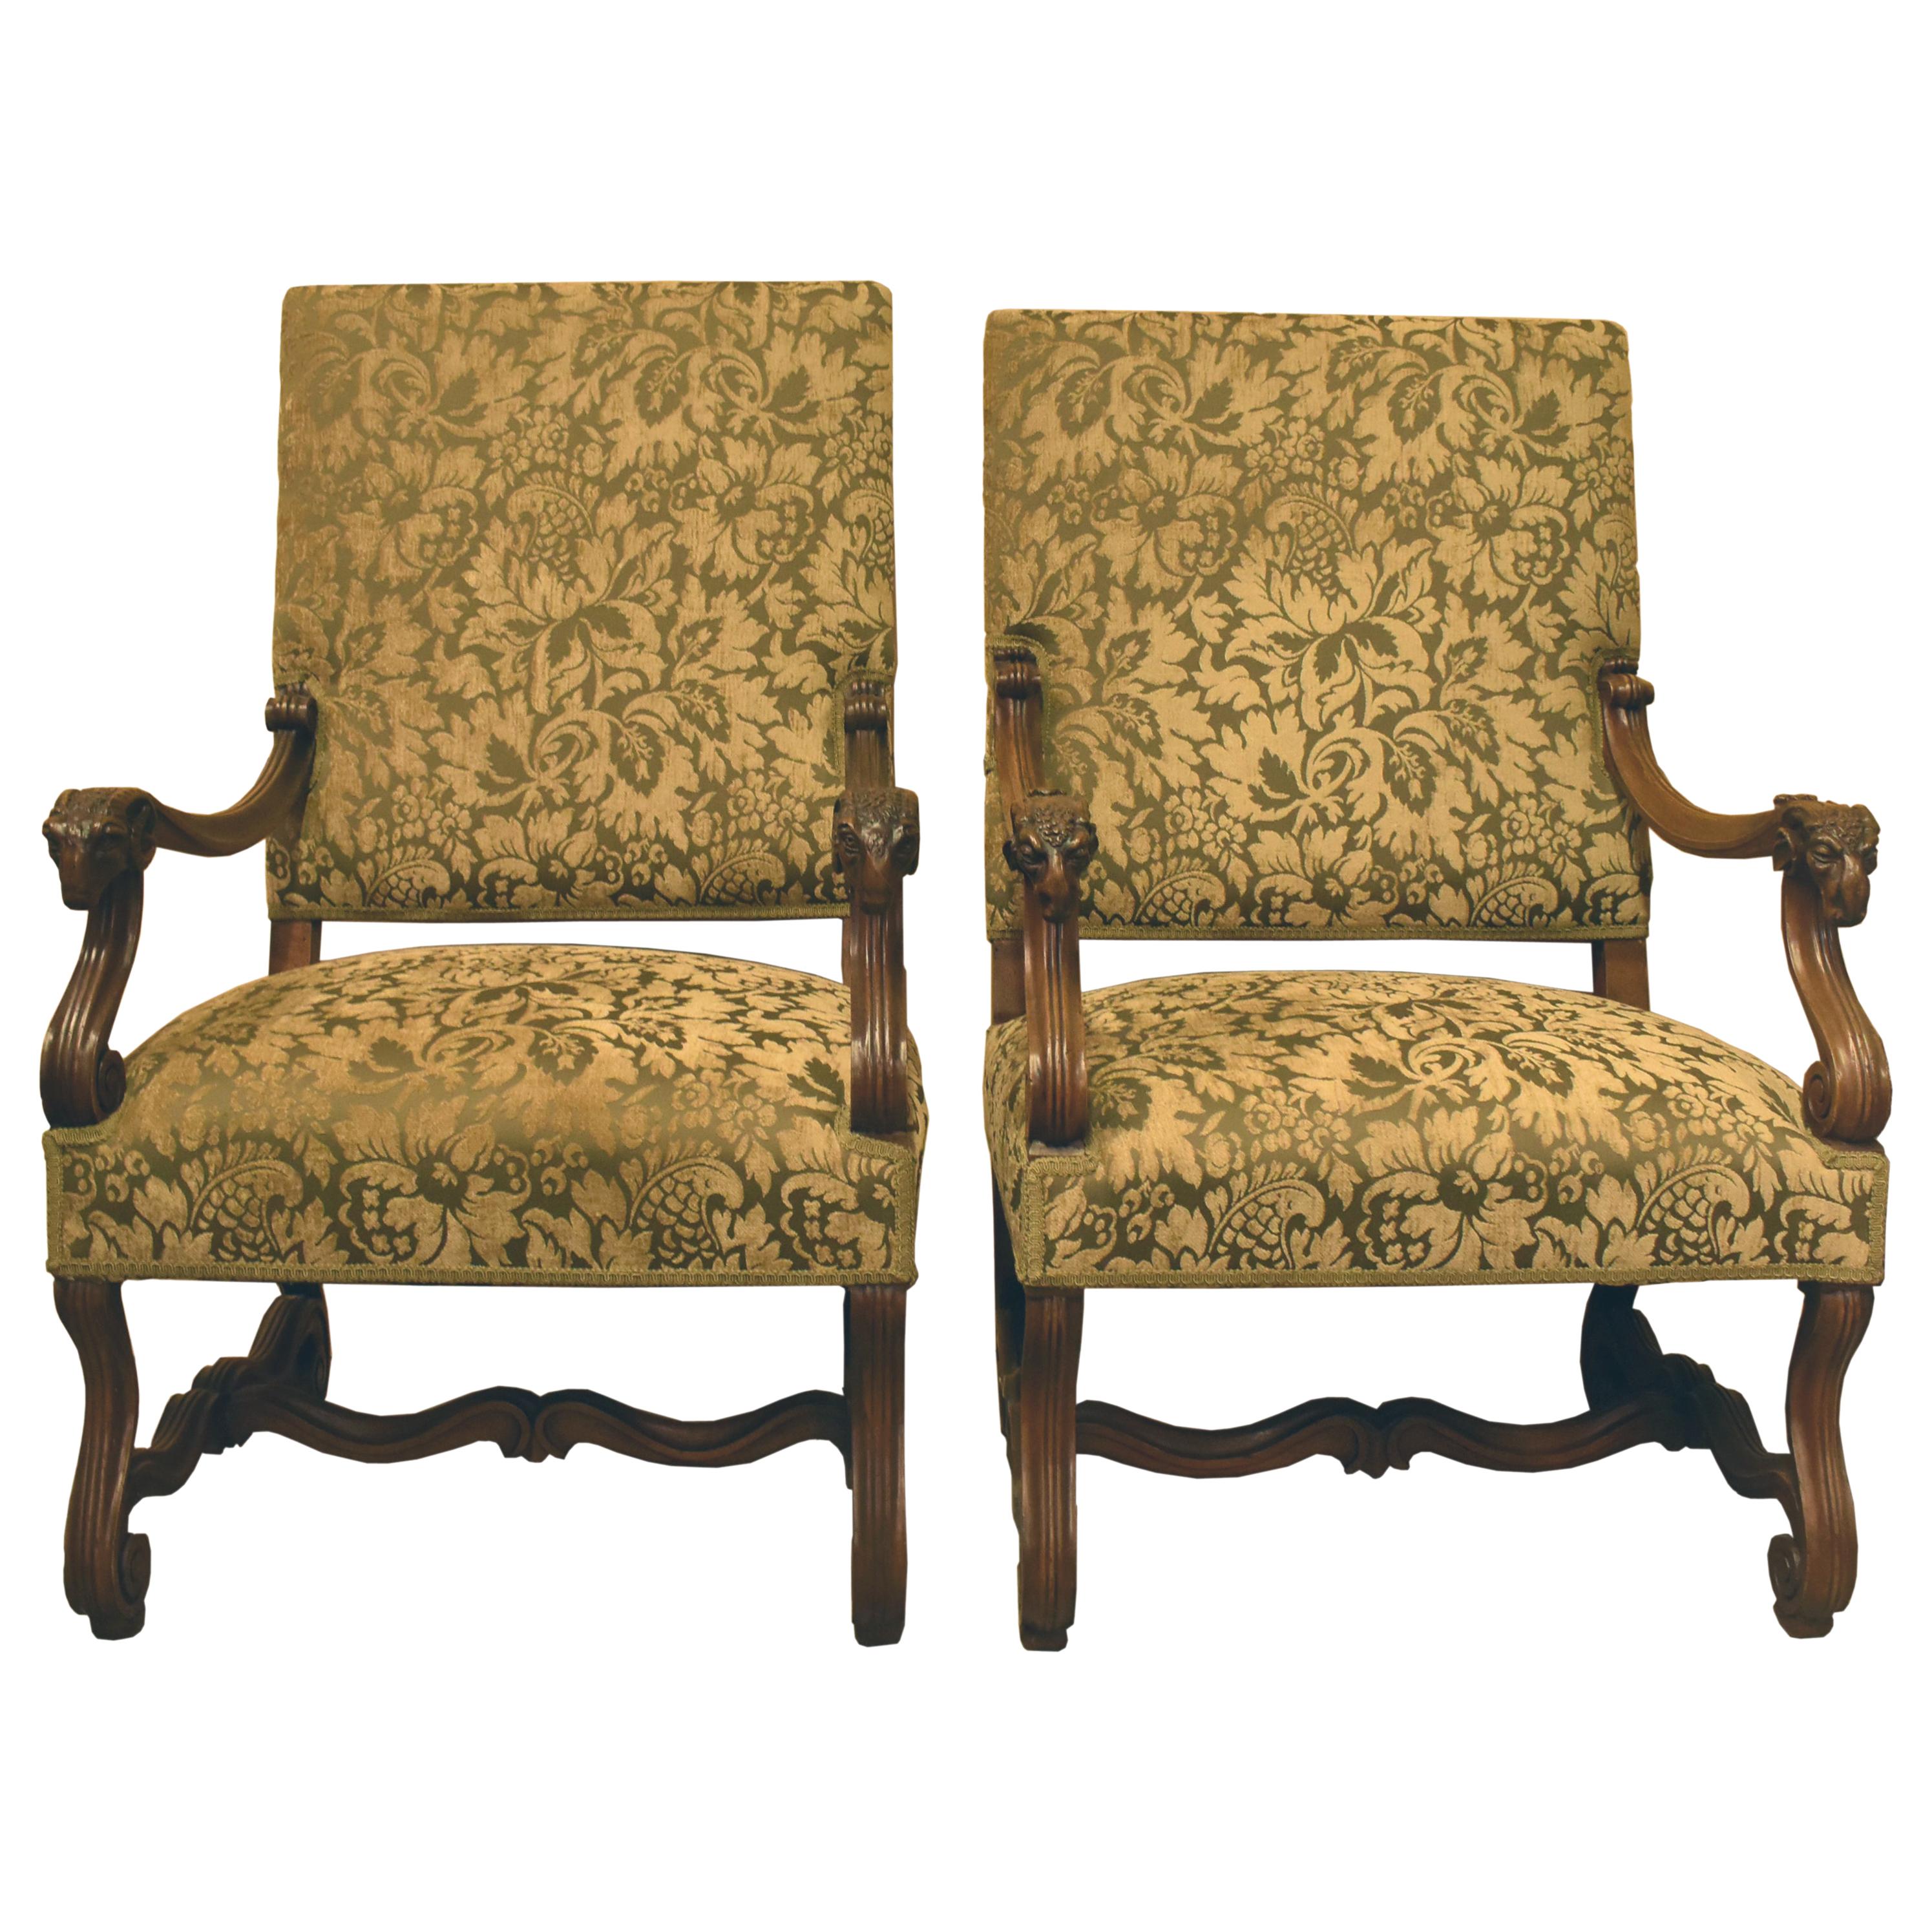 Pair of Italian Carved Walnut Armchairs, 19th Century